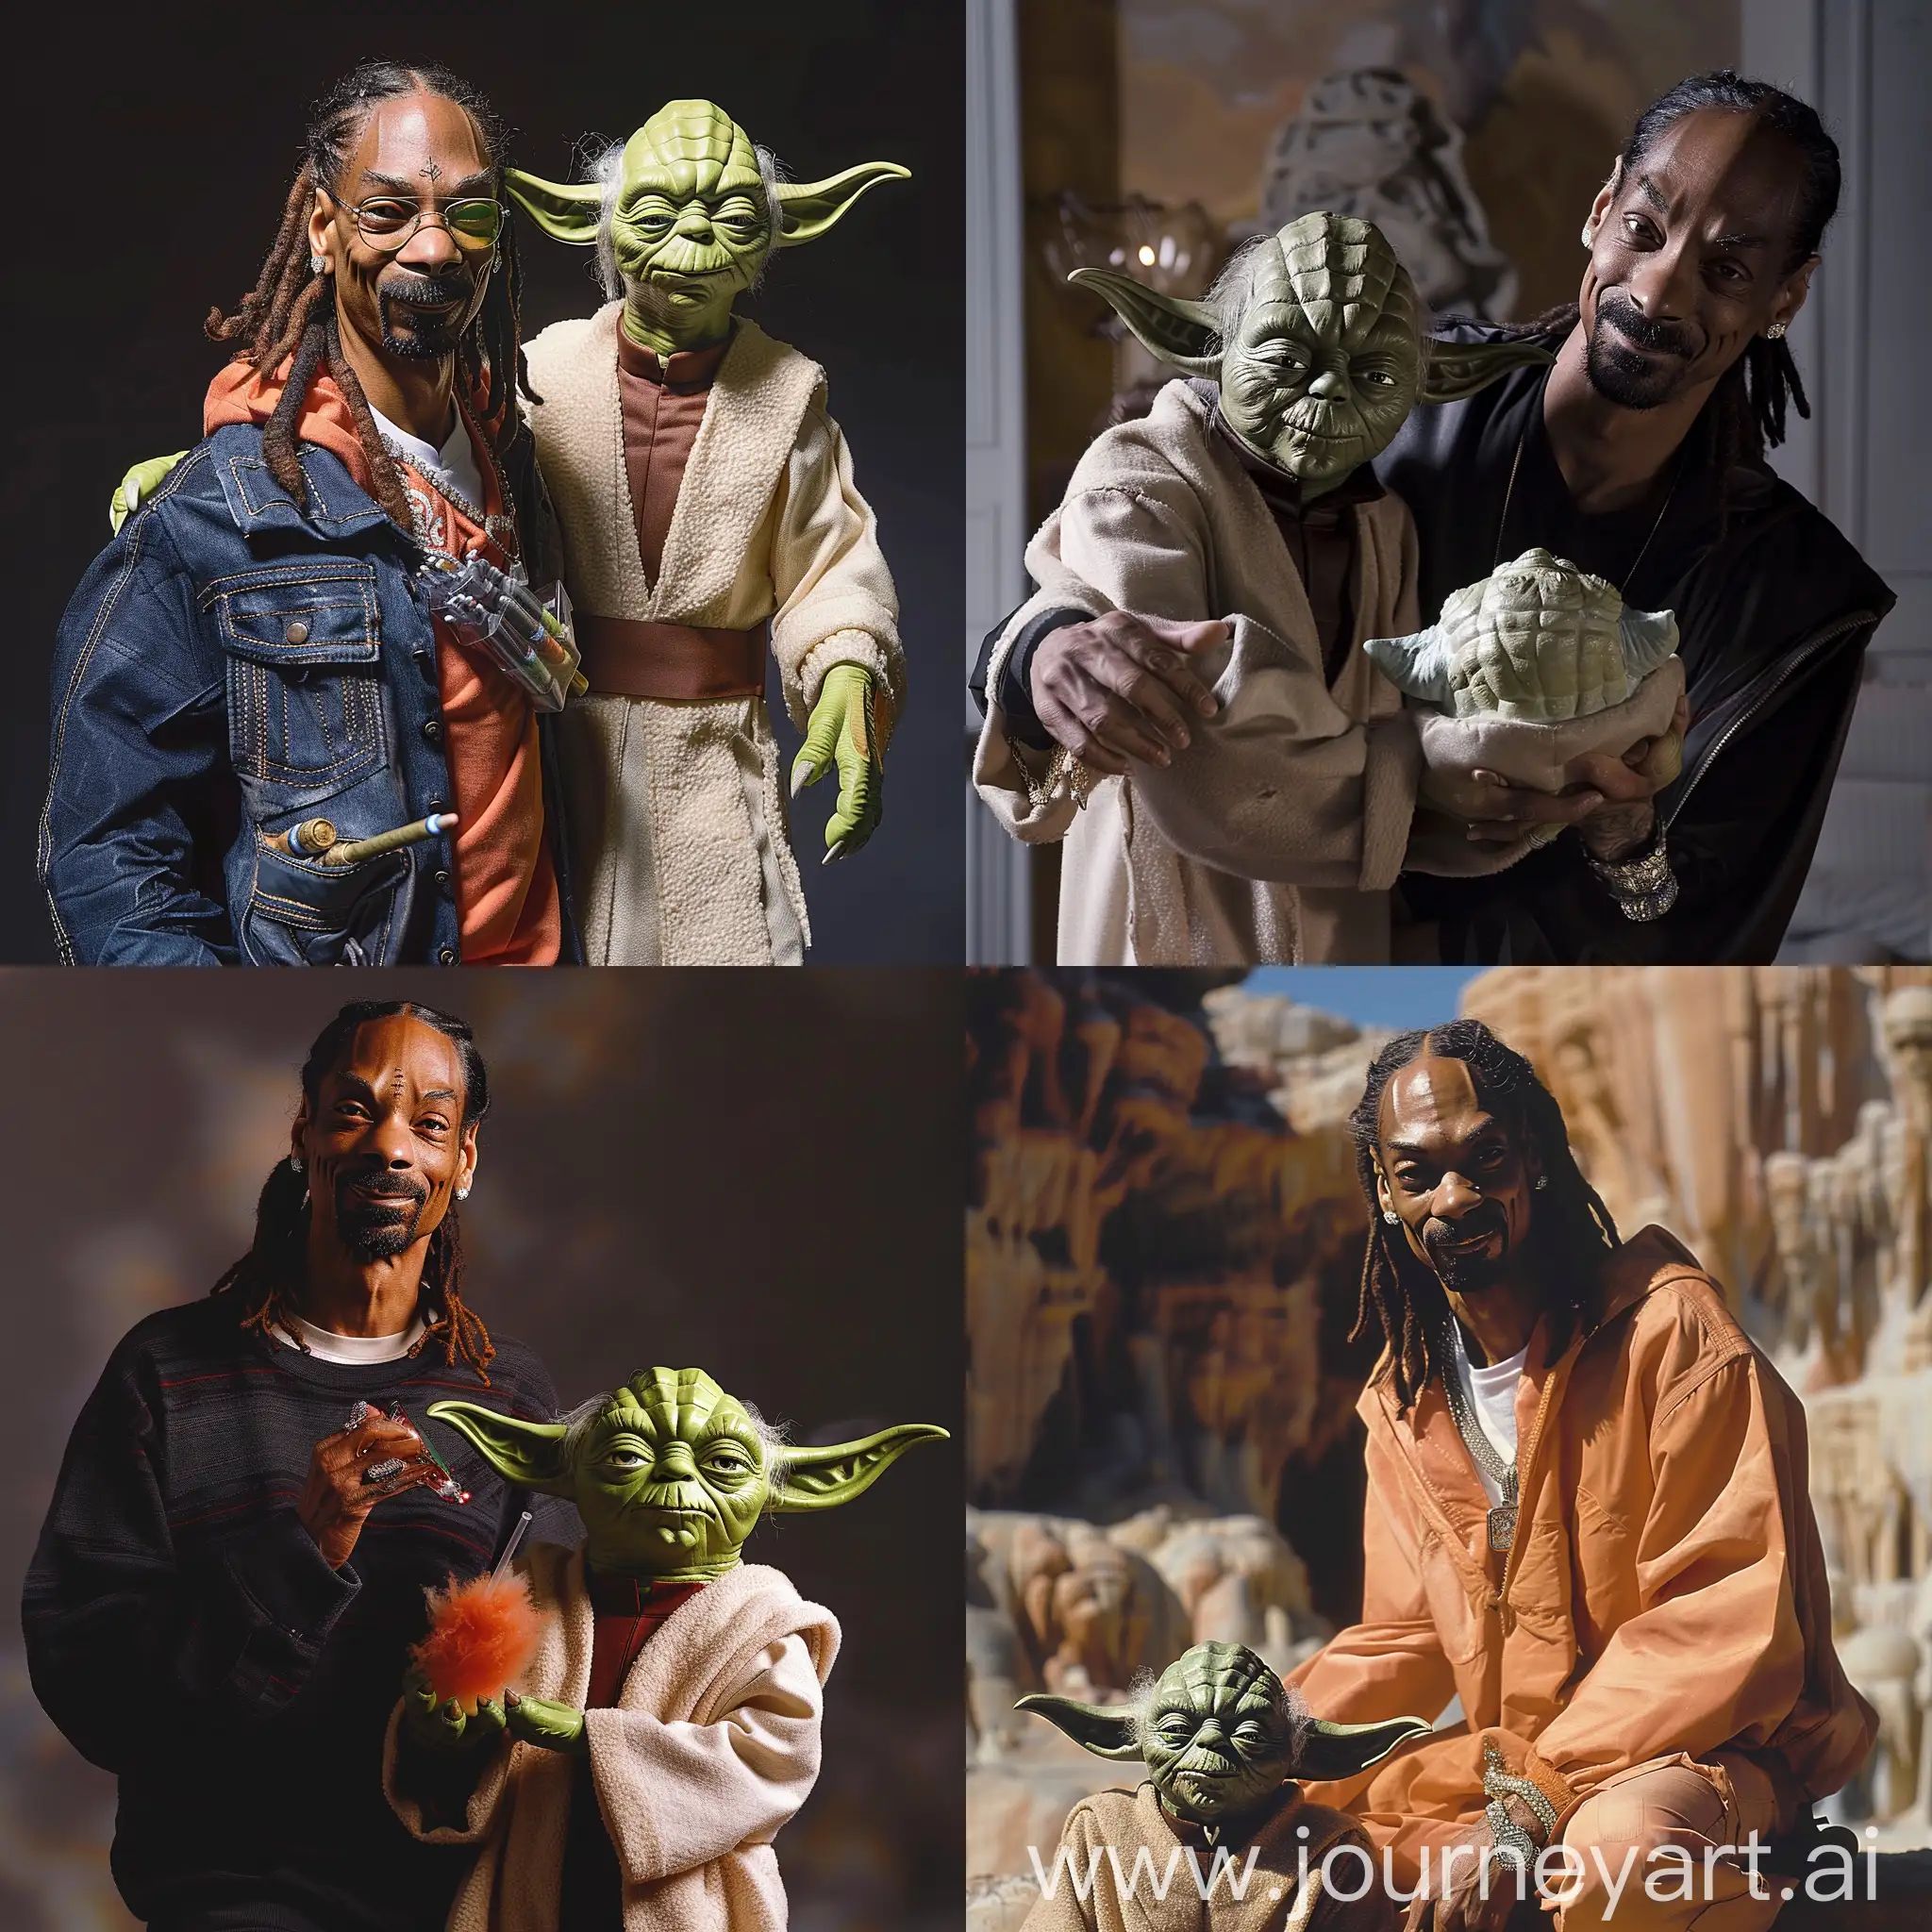 Snoop Dogg getting high with Yoda